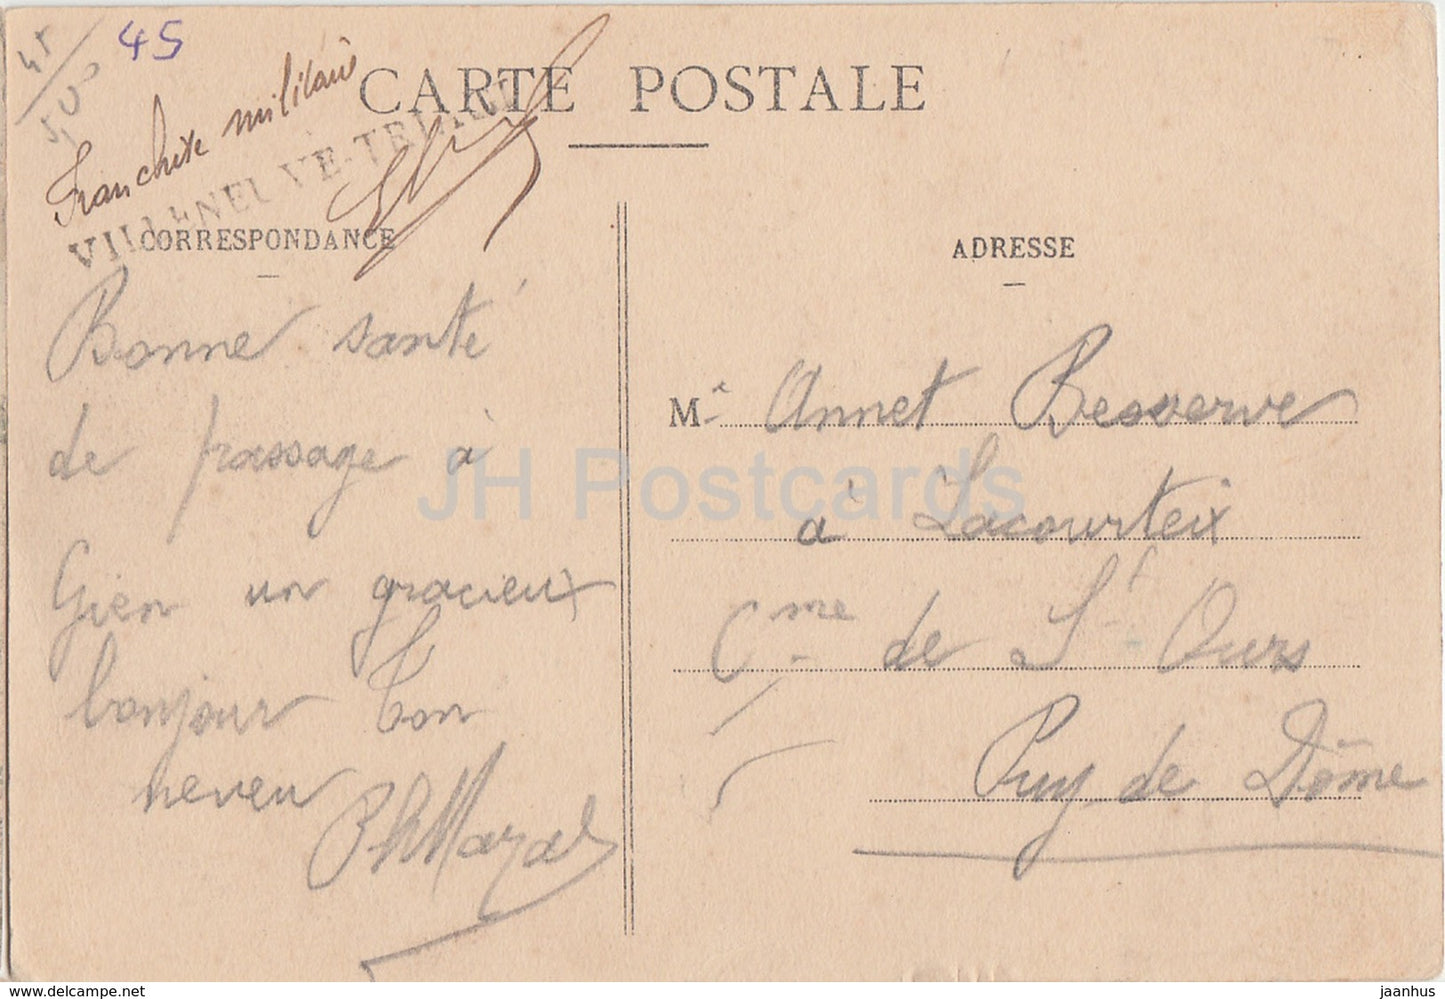 Gien - Le Chateau - Schloss - 3 - alte Postkarte - Frankreich - gebraucht